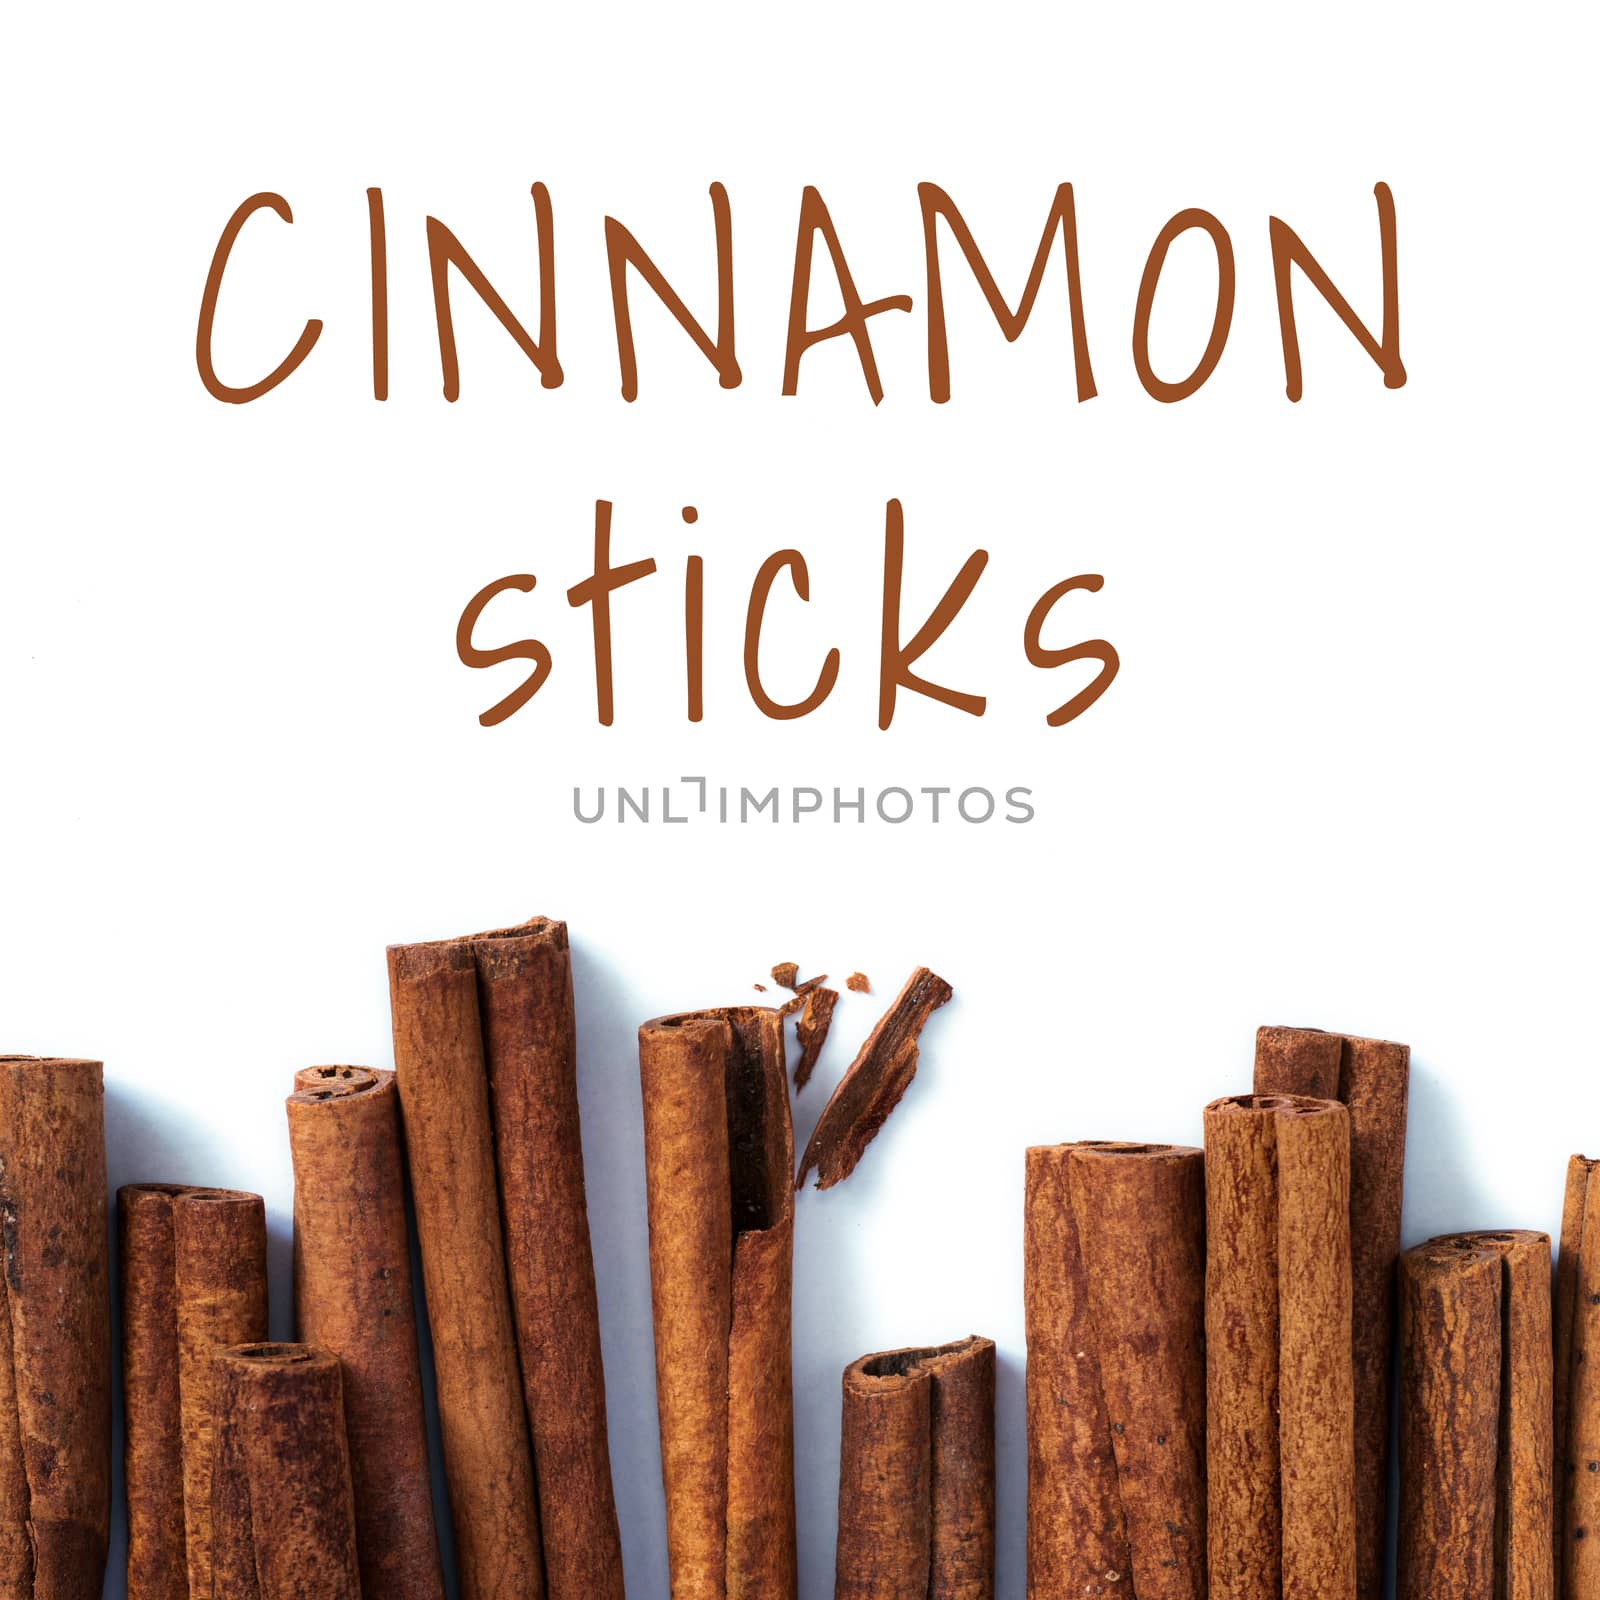 cinnamon sticks isolated on white by fascinadora